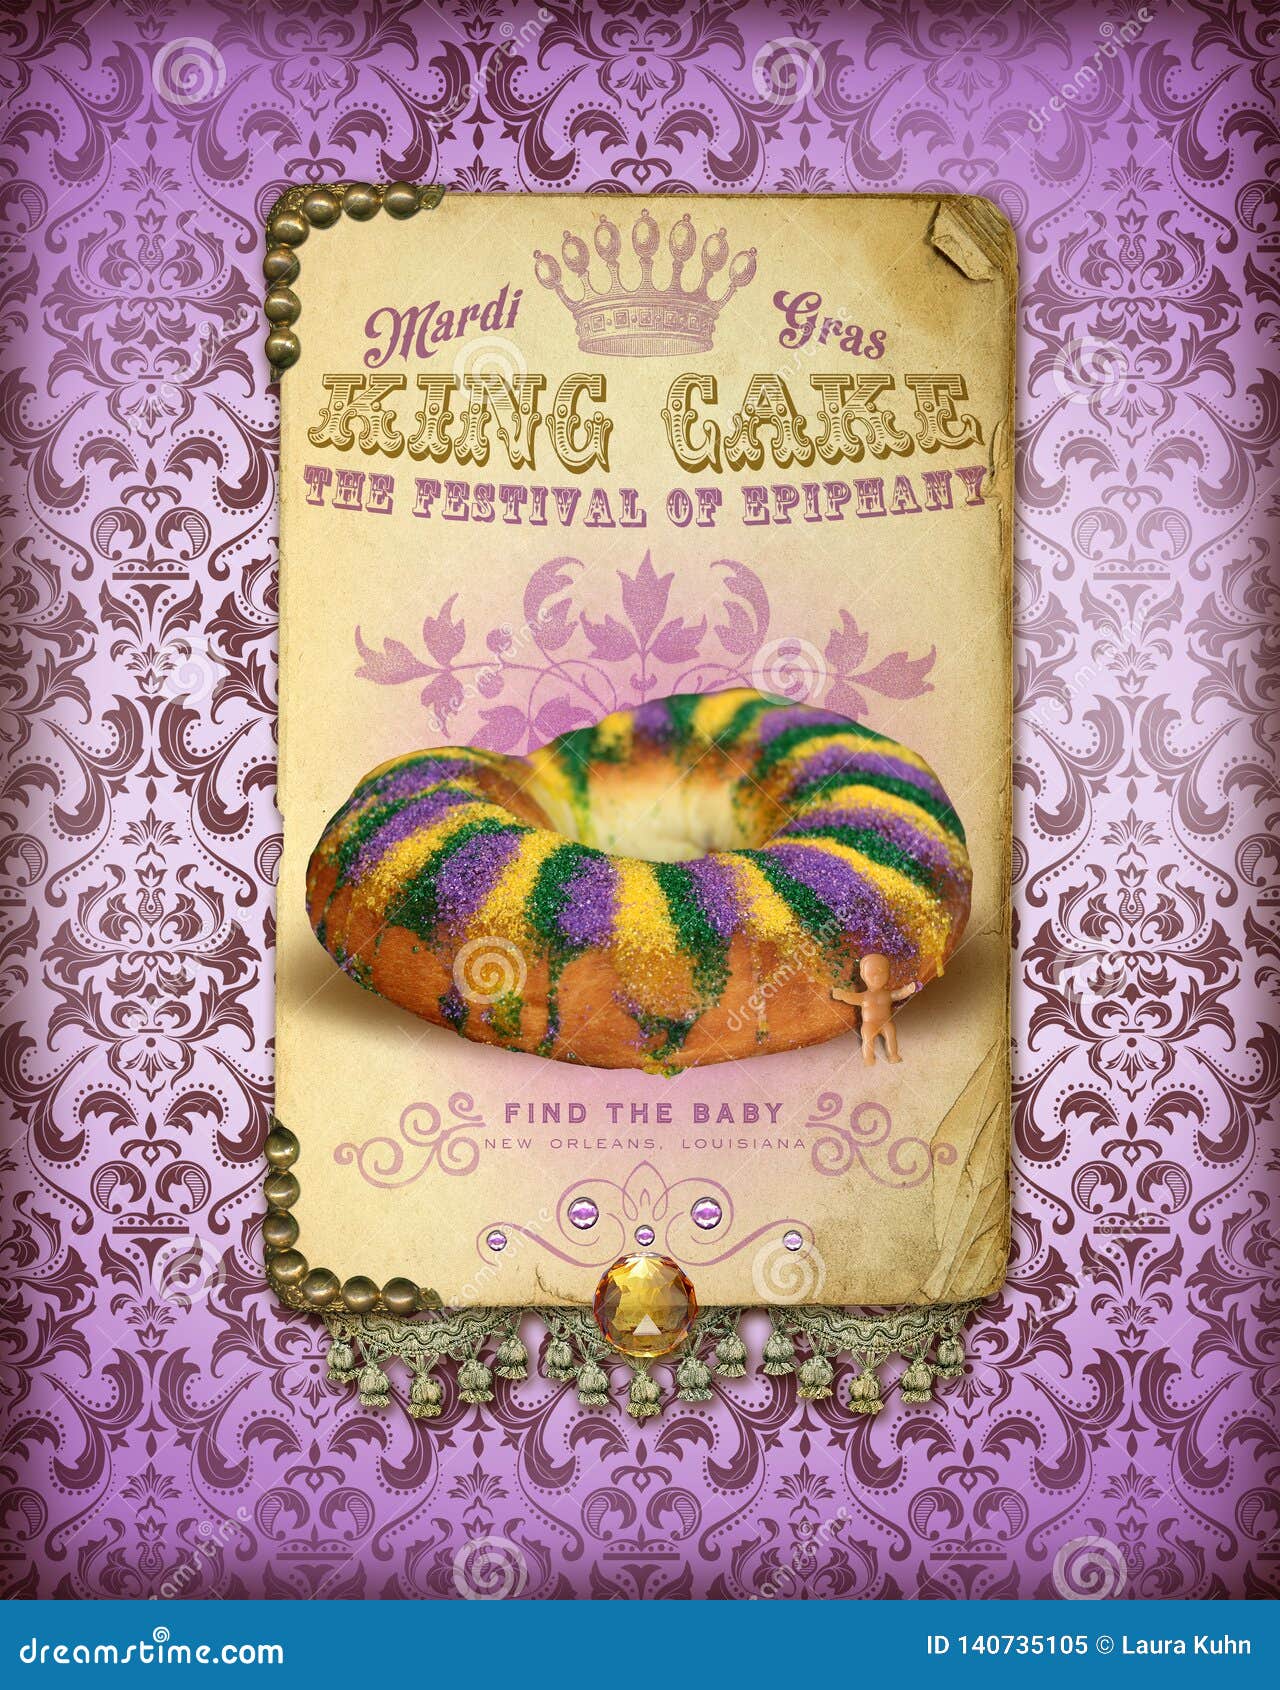 nola culture collection mardi gras king cake